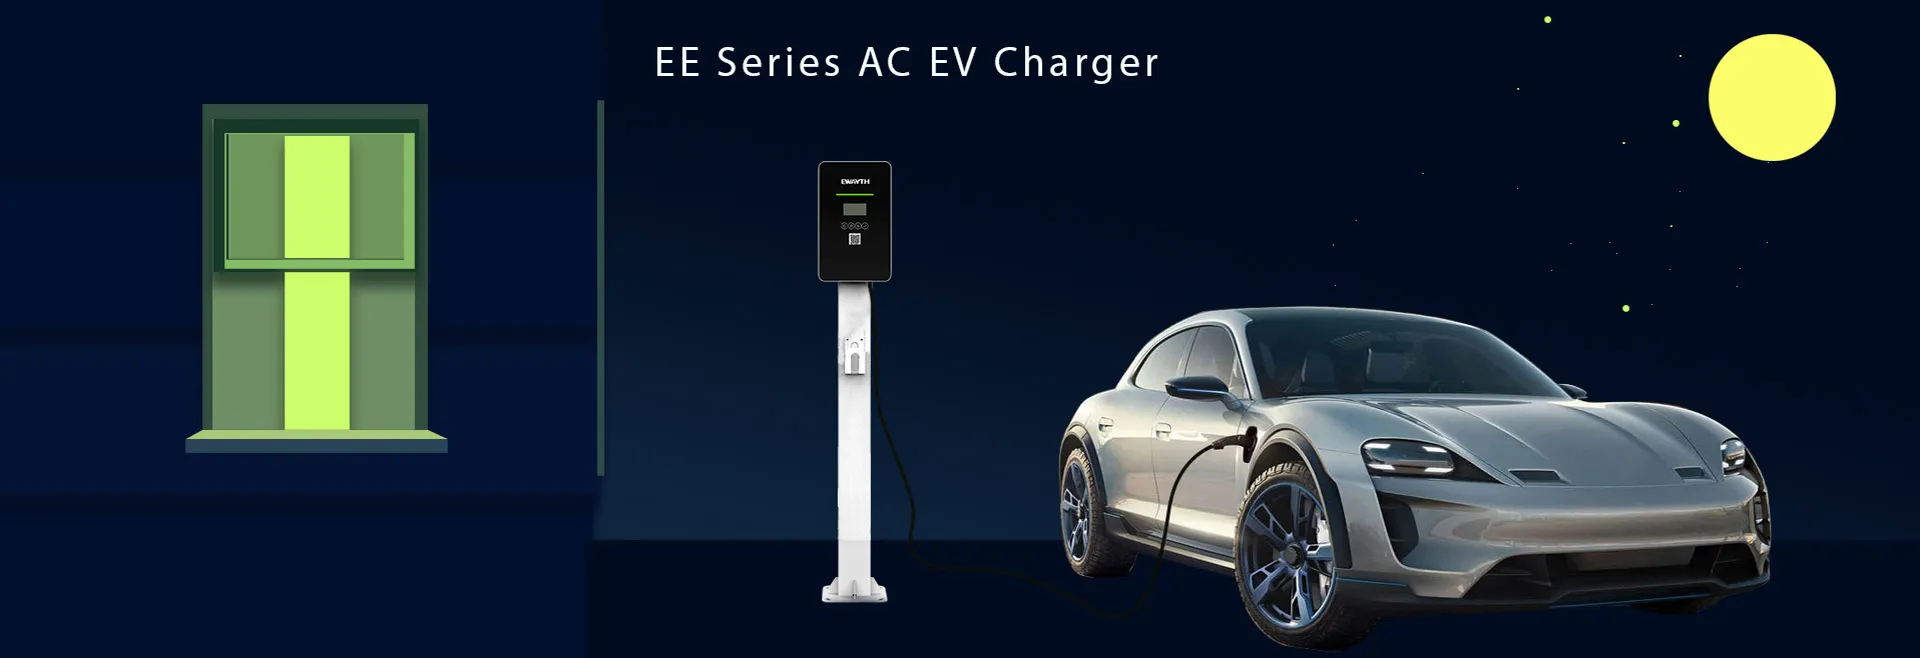 EE Series AC EV Charger